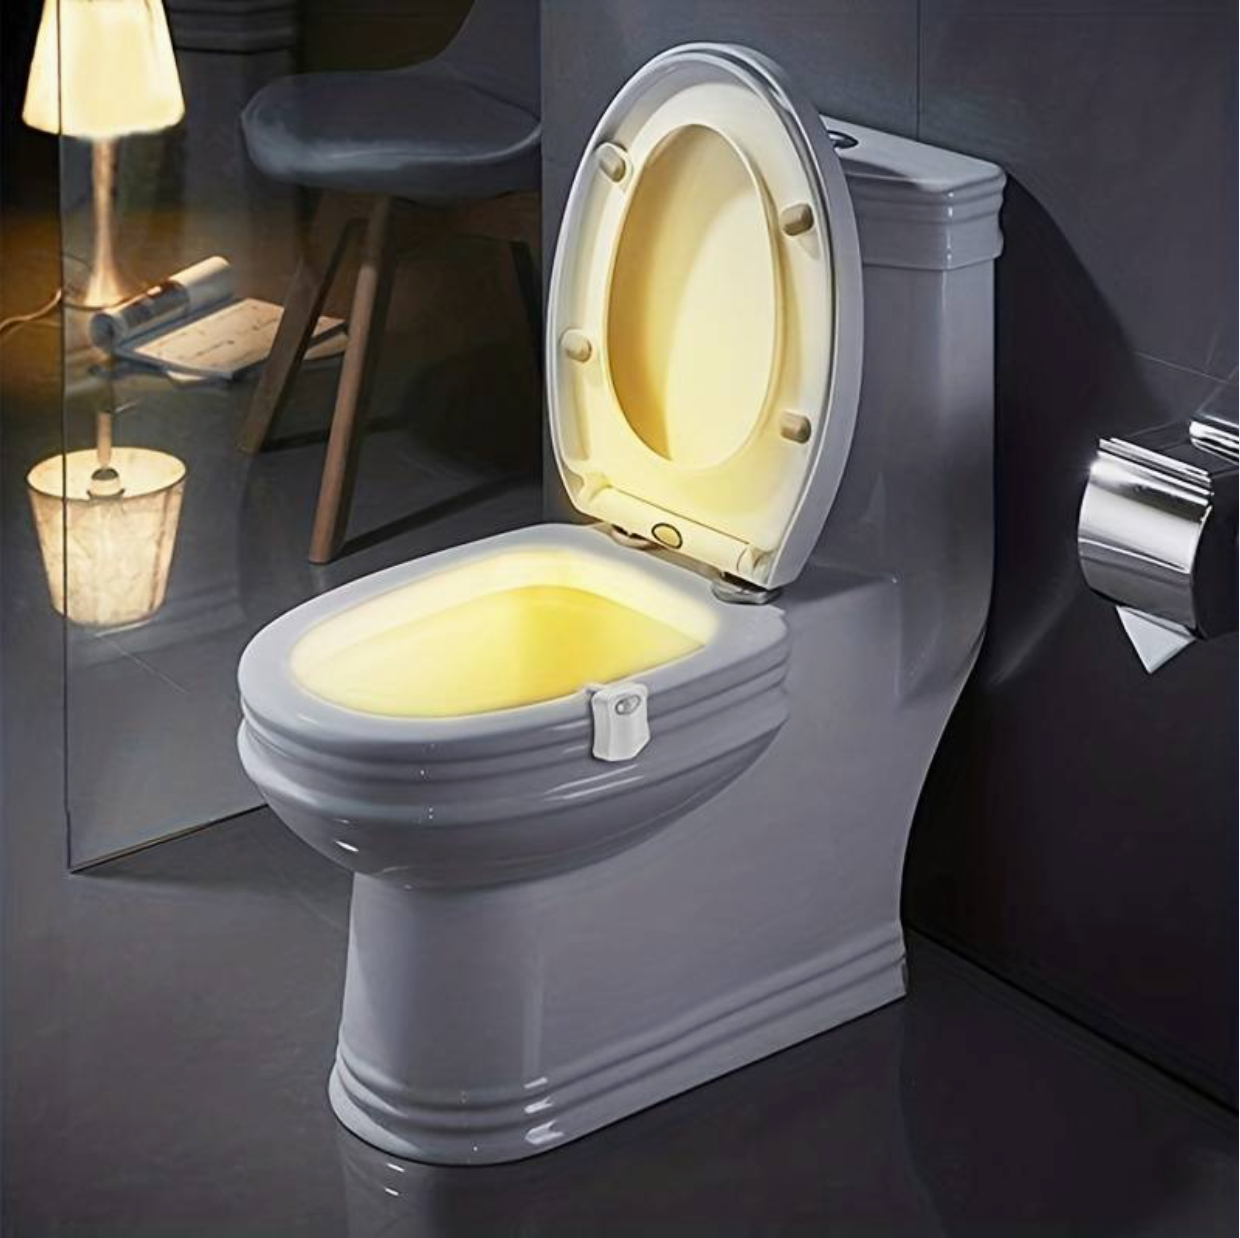 The Toilet Light